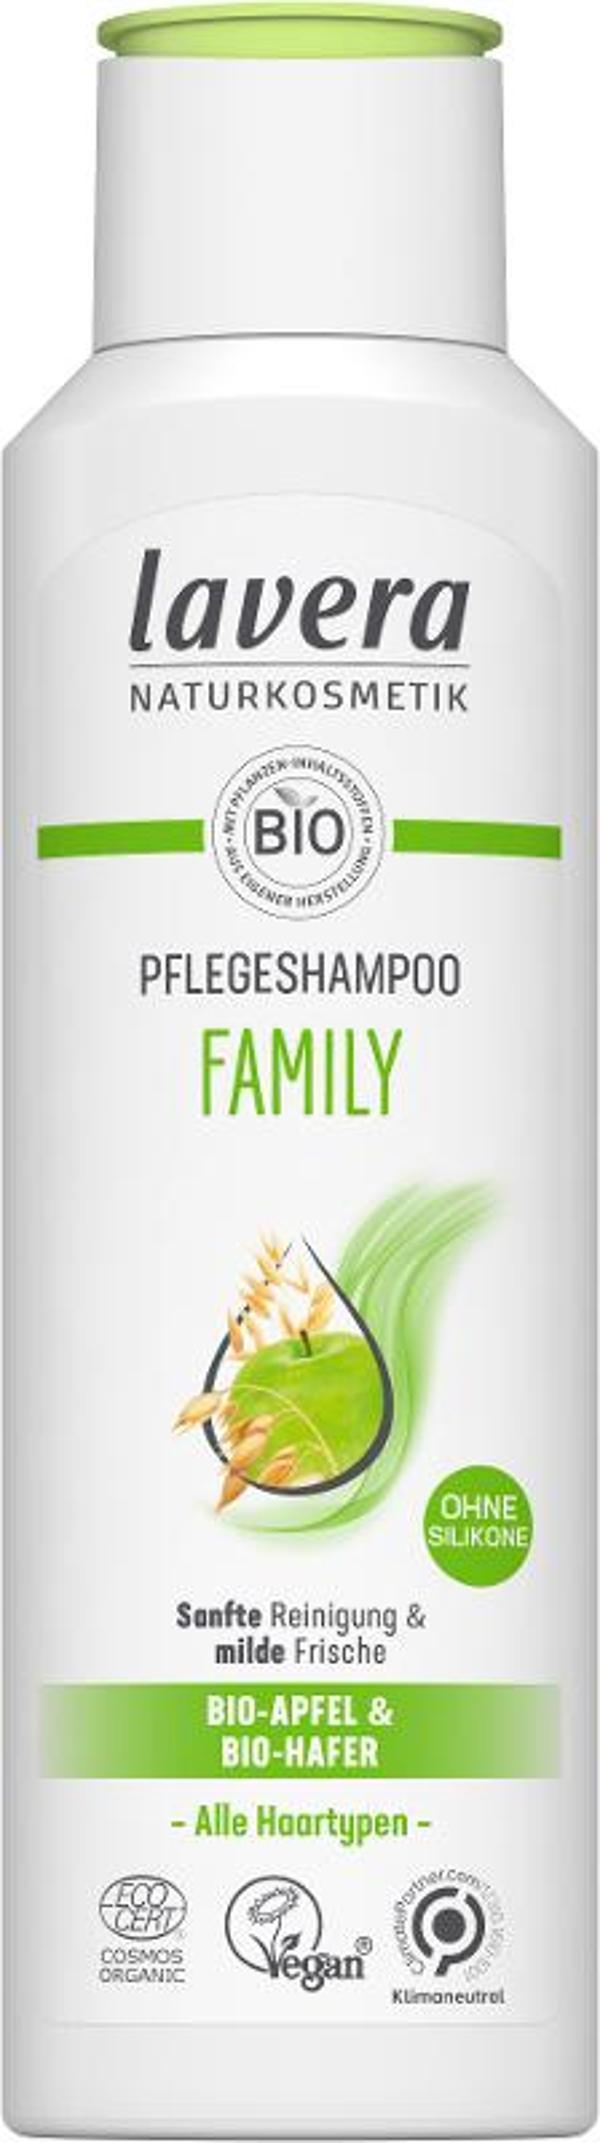 Produktfoto zu Shampoo Family 250ml